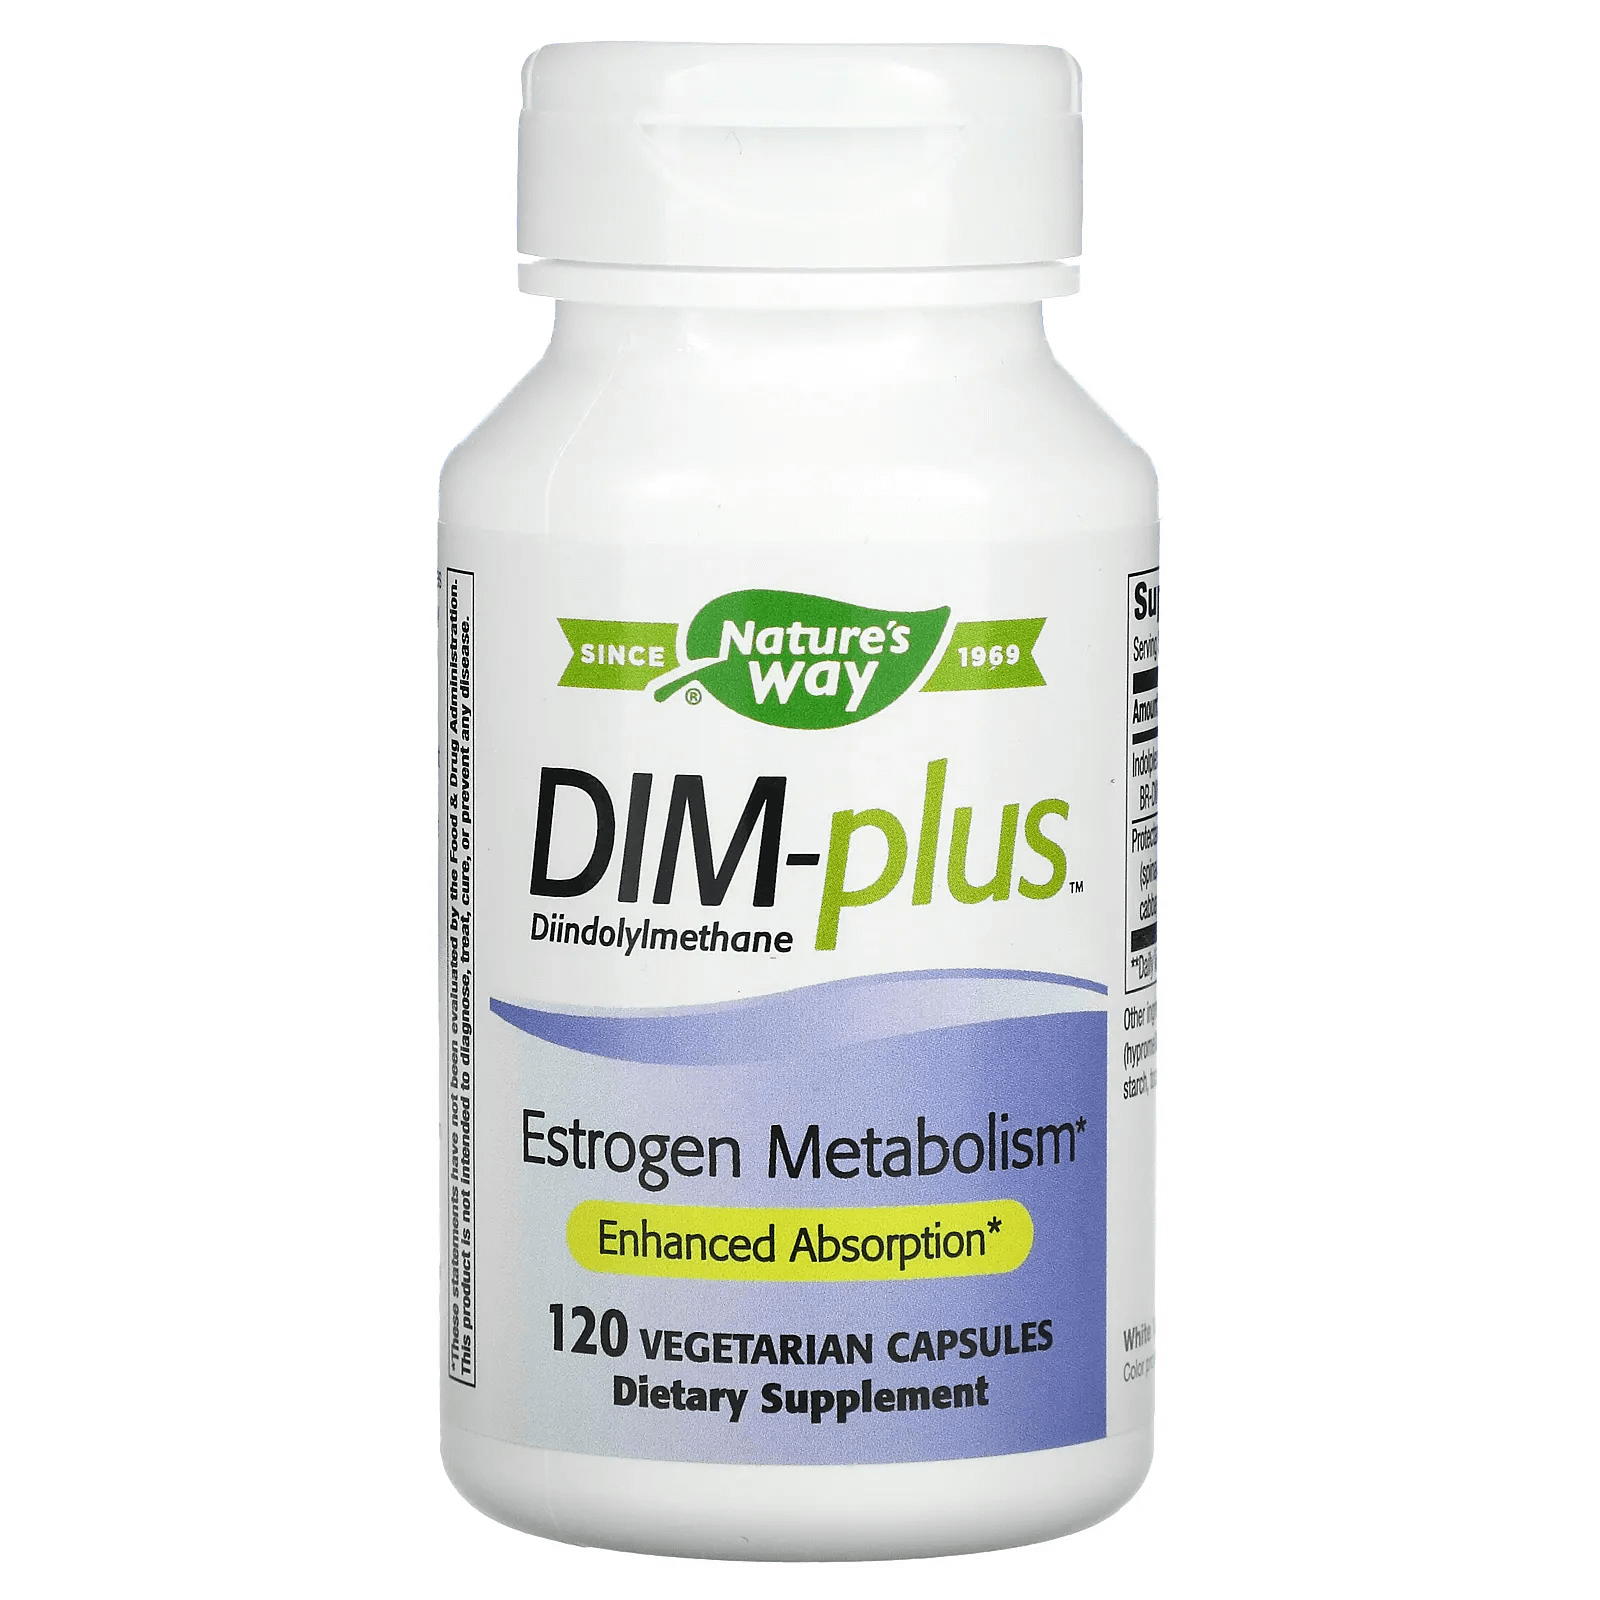 DIM-plus метаболизм эстрогена Nature's Way, 120 капсул